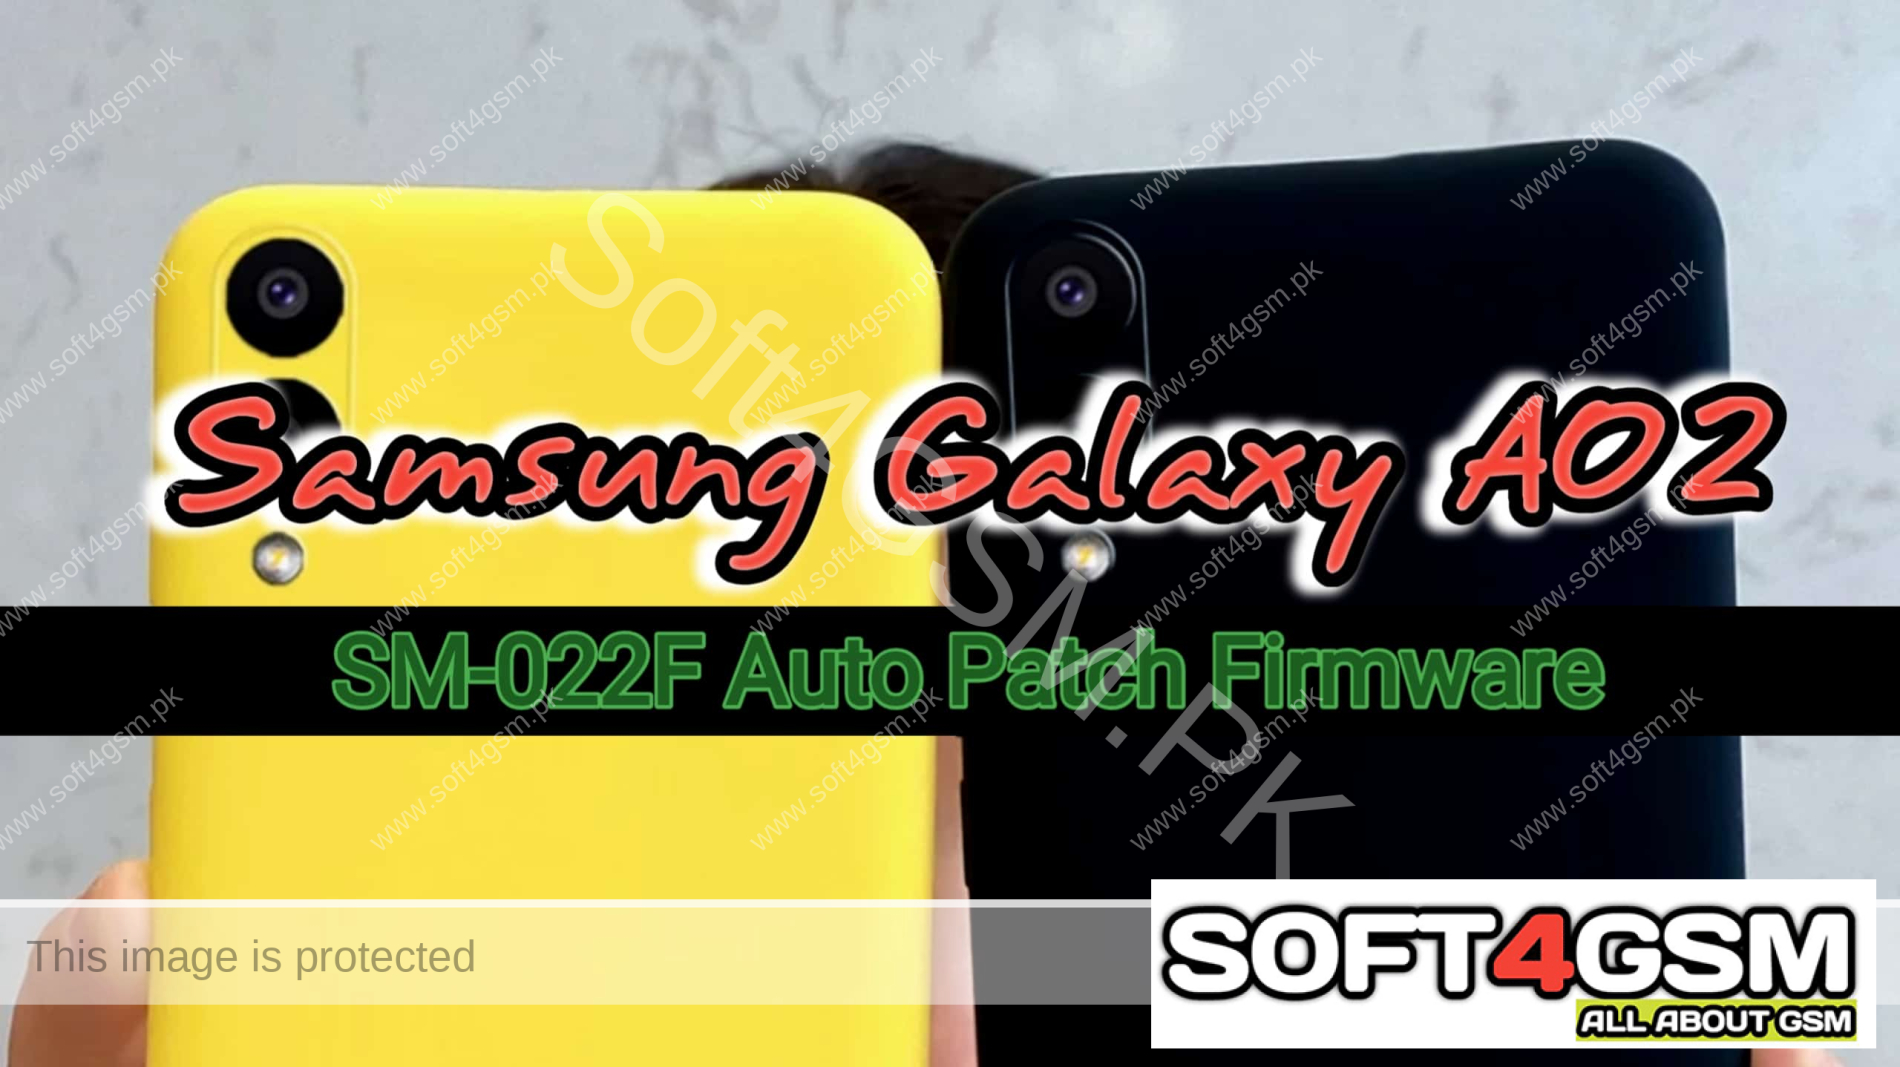 Galaxy A02 SM-A022F BIT 3 Auto Patch Firmware